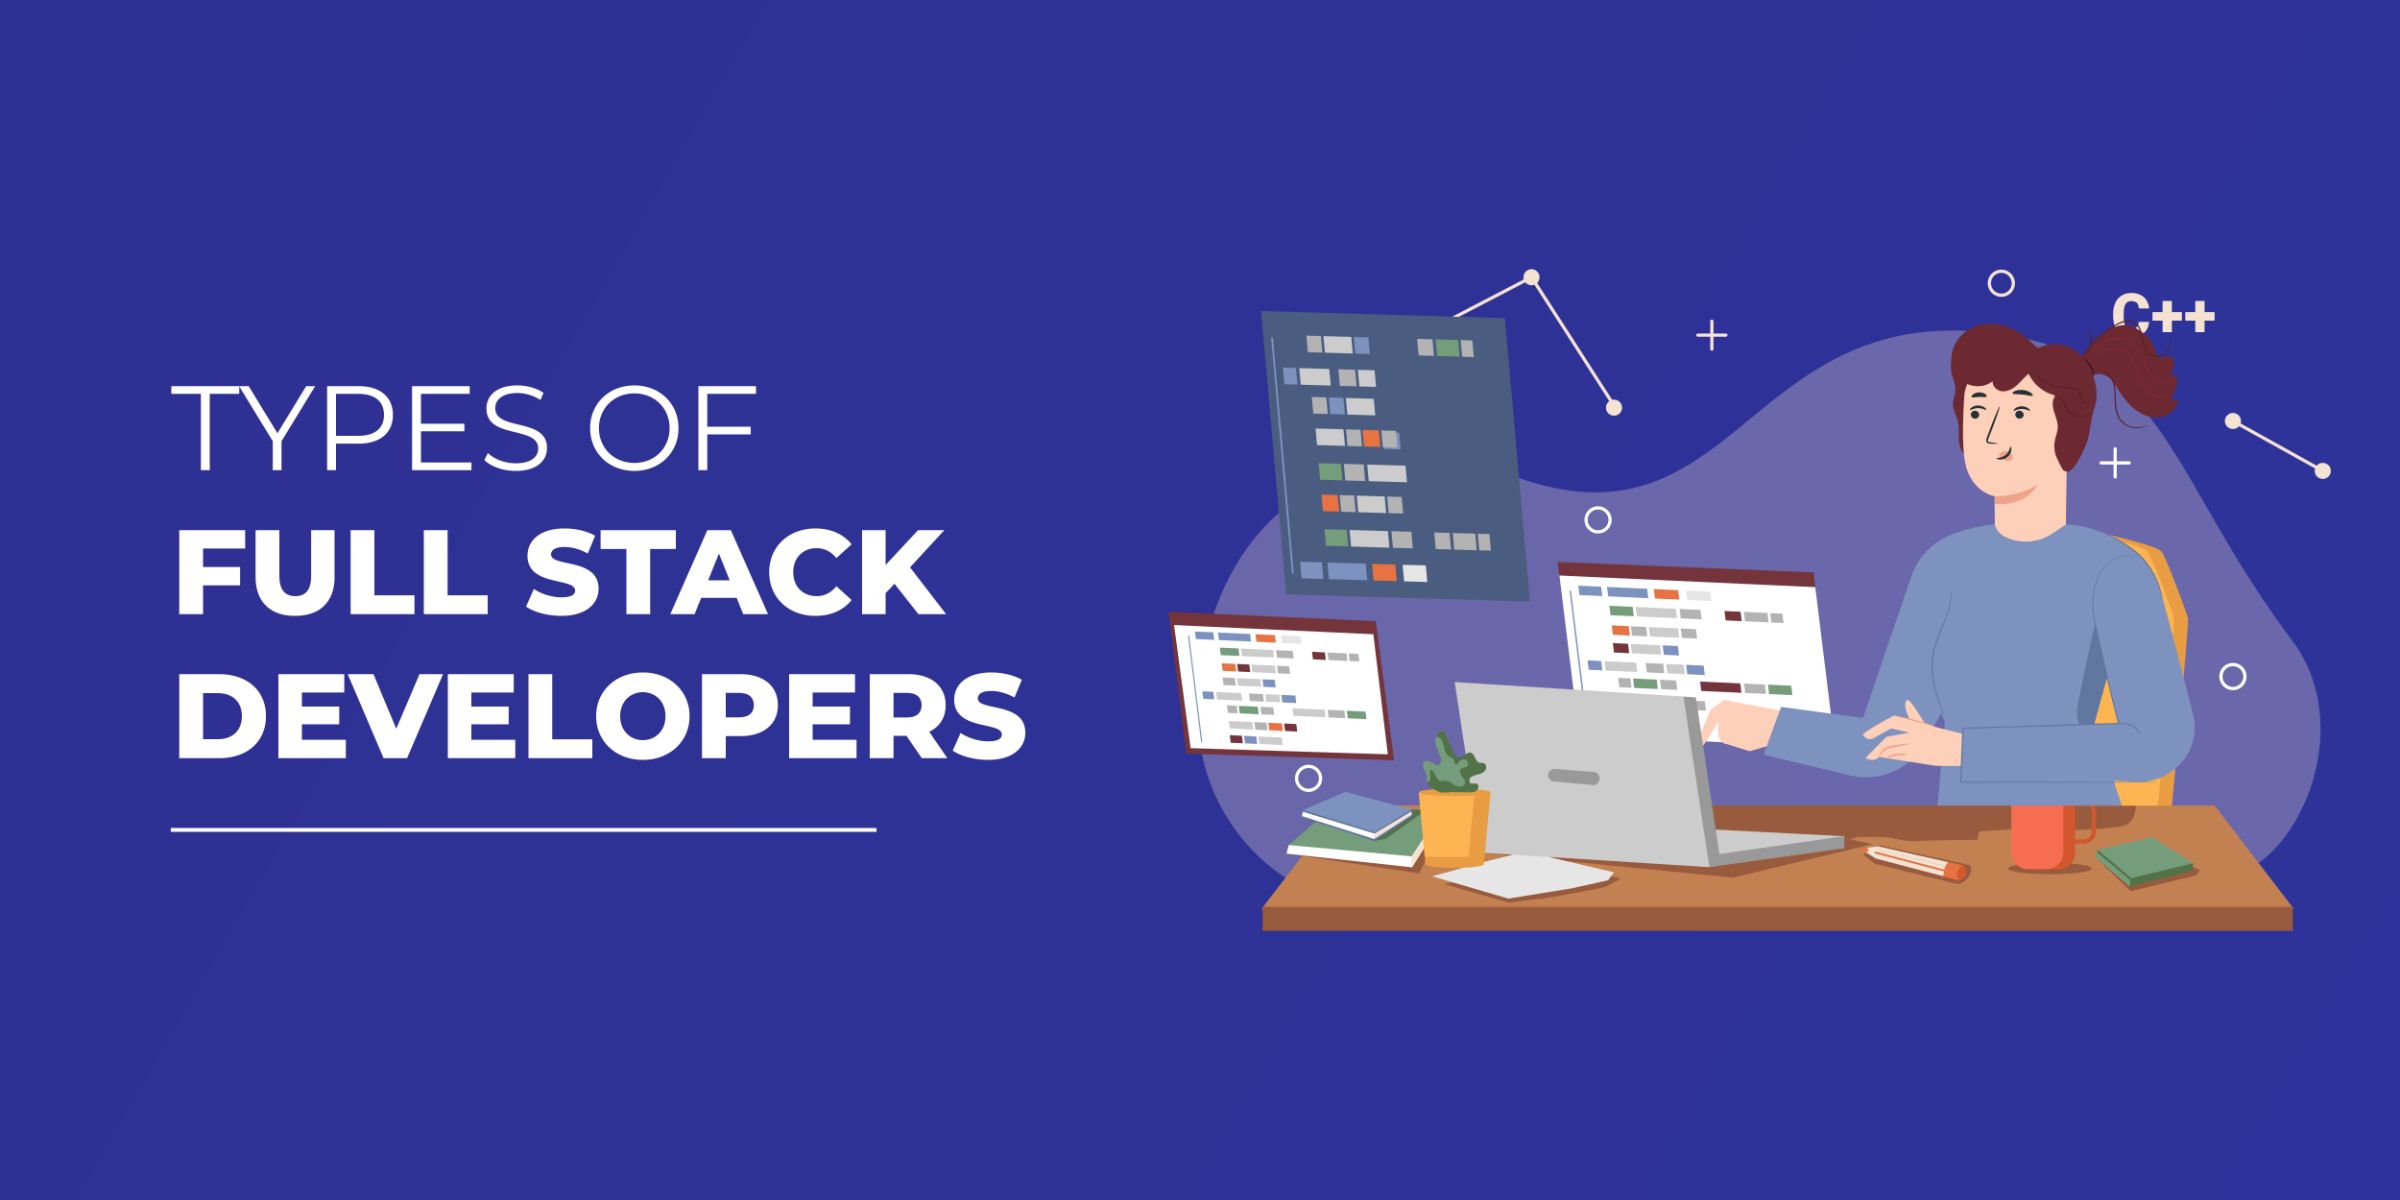 Types of Full Stack Developers